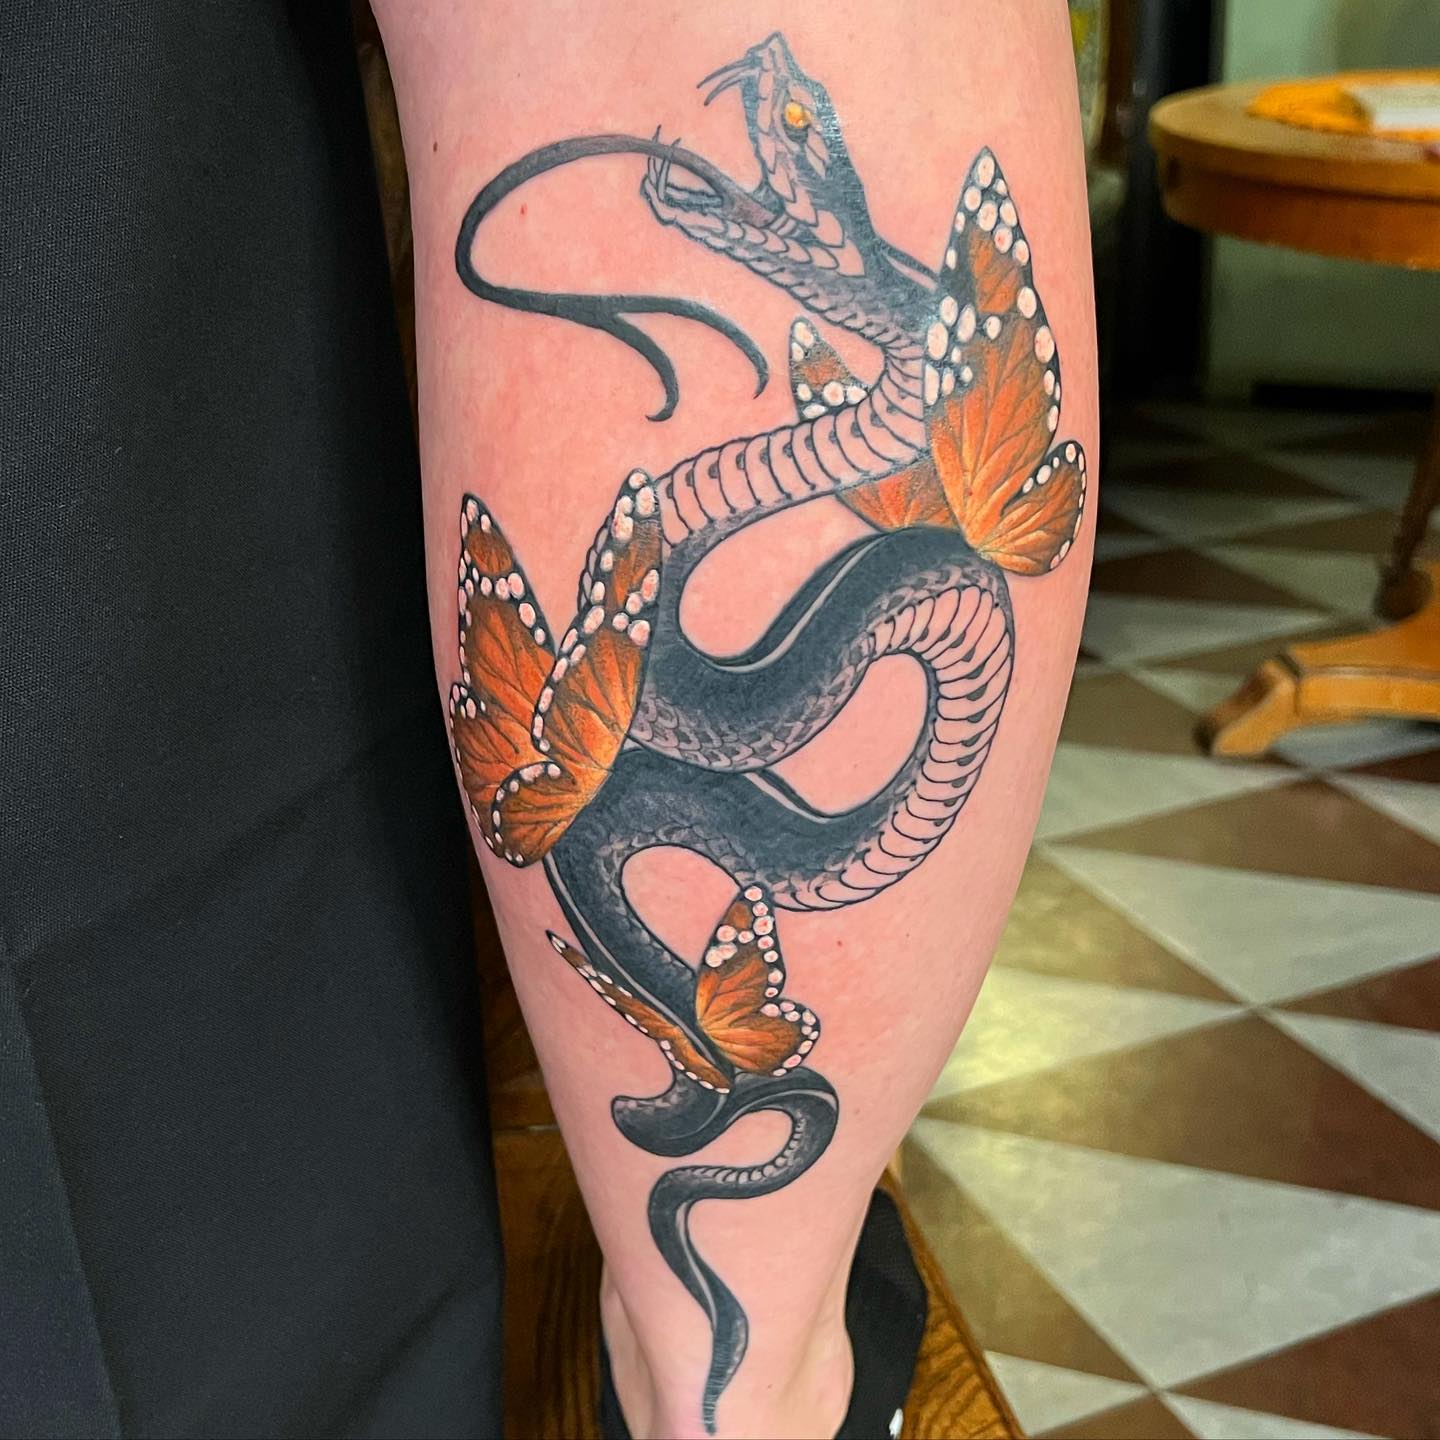 Tatuaje de serpiente de mantequilla